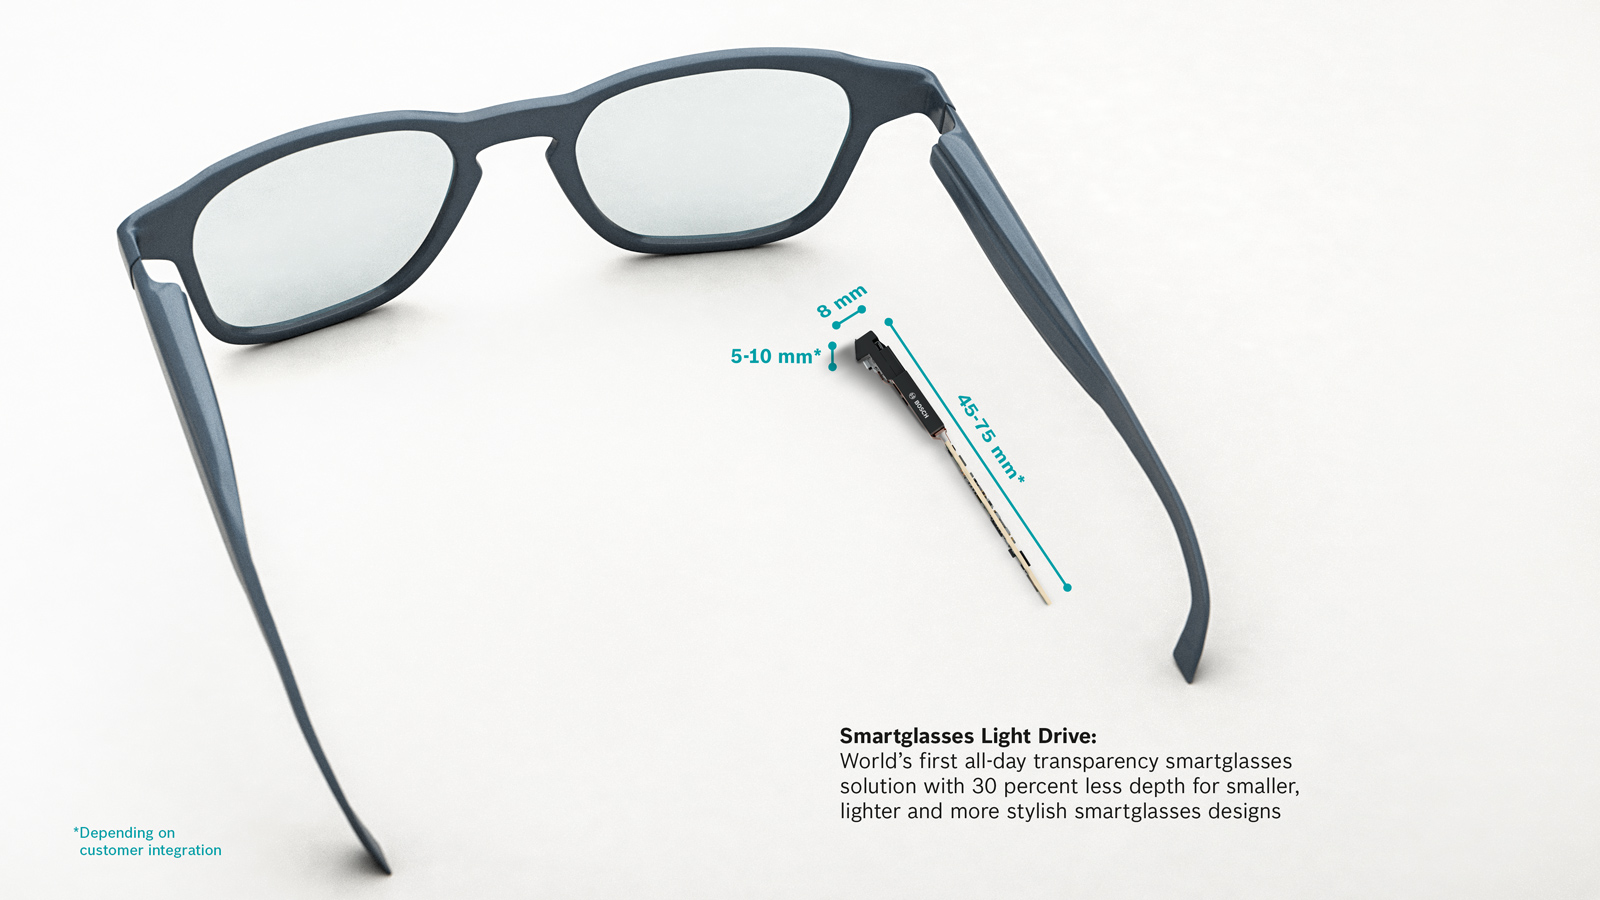 Next generation of smartglasses